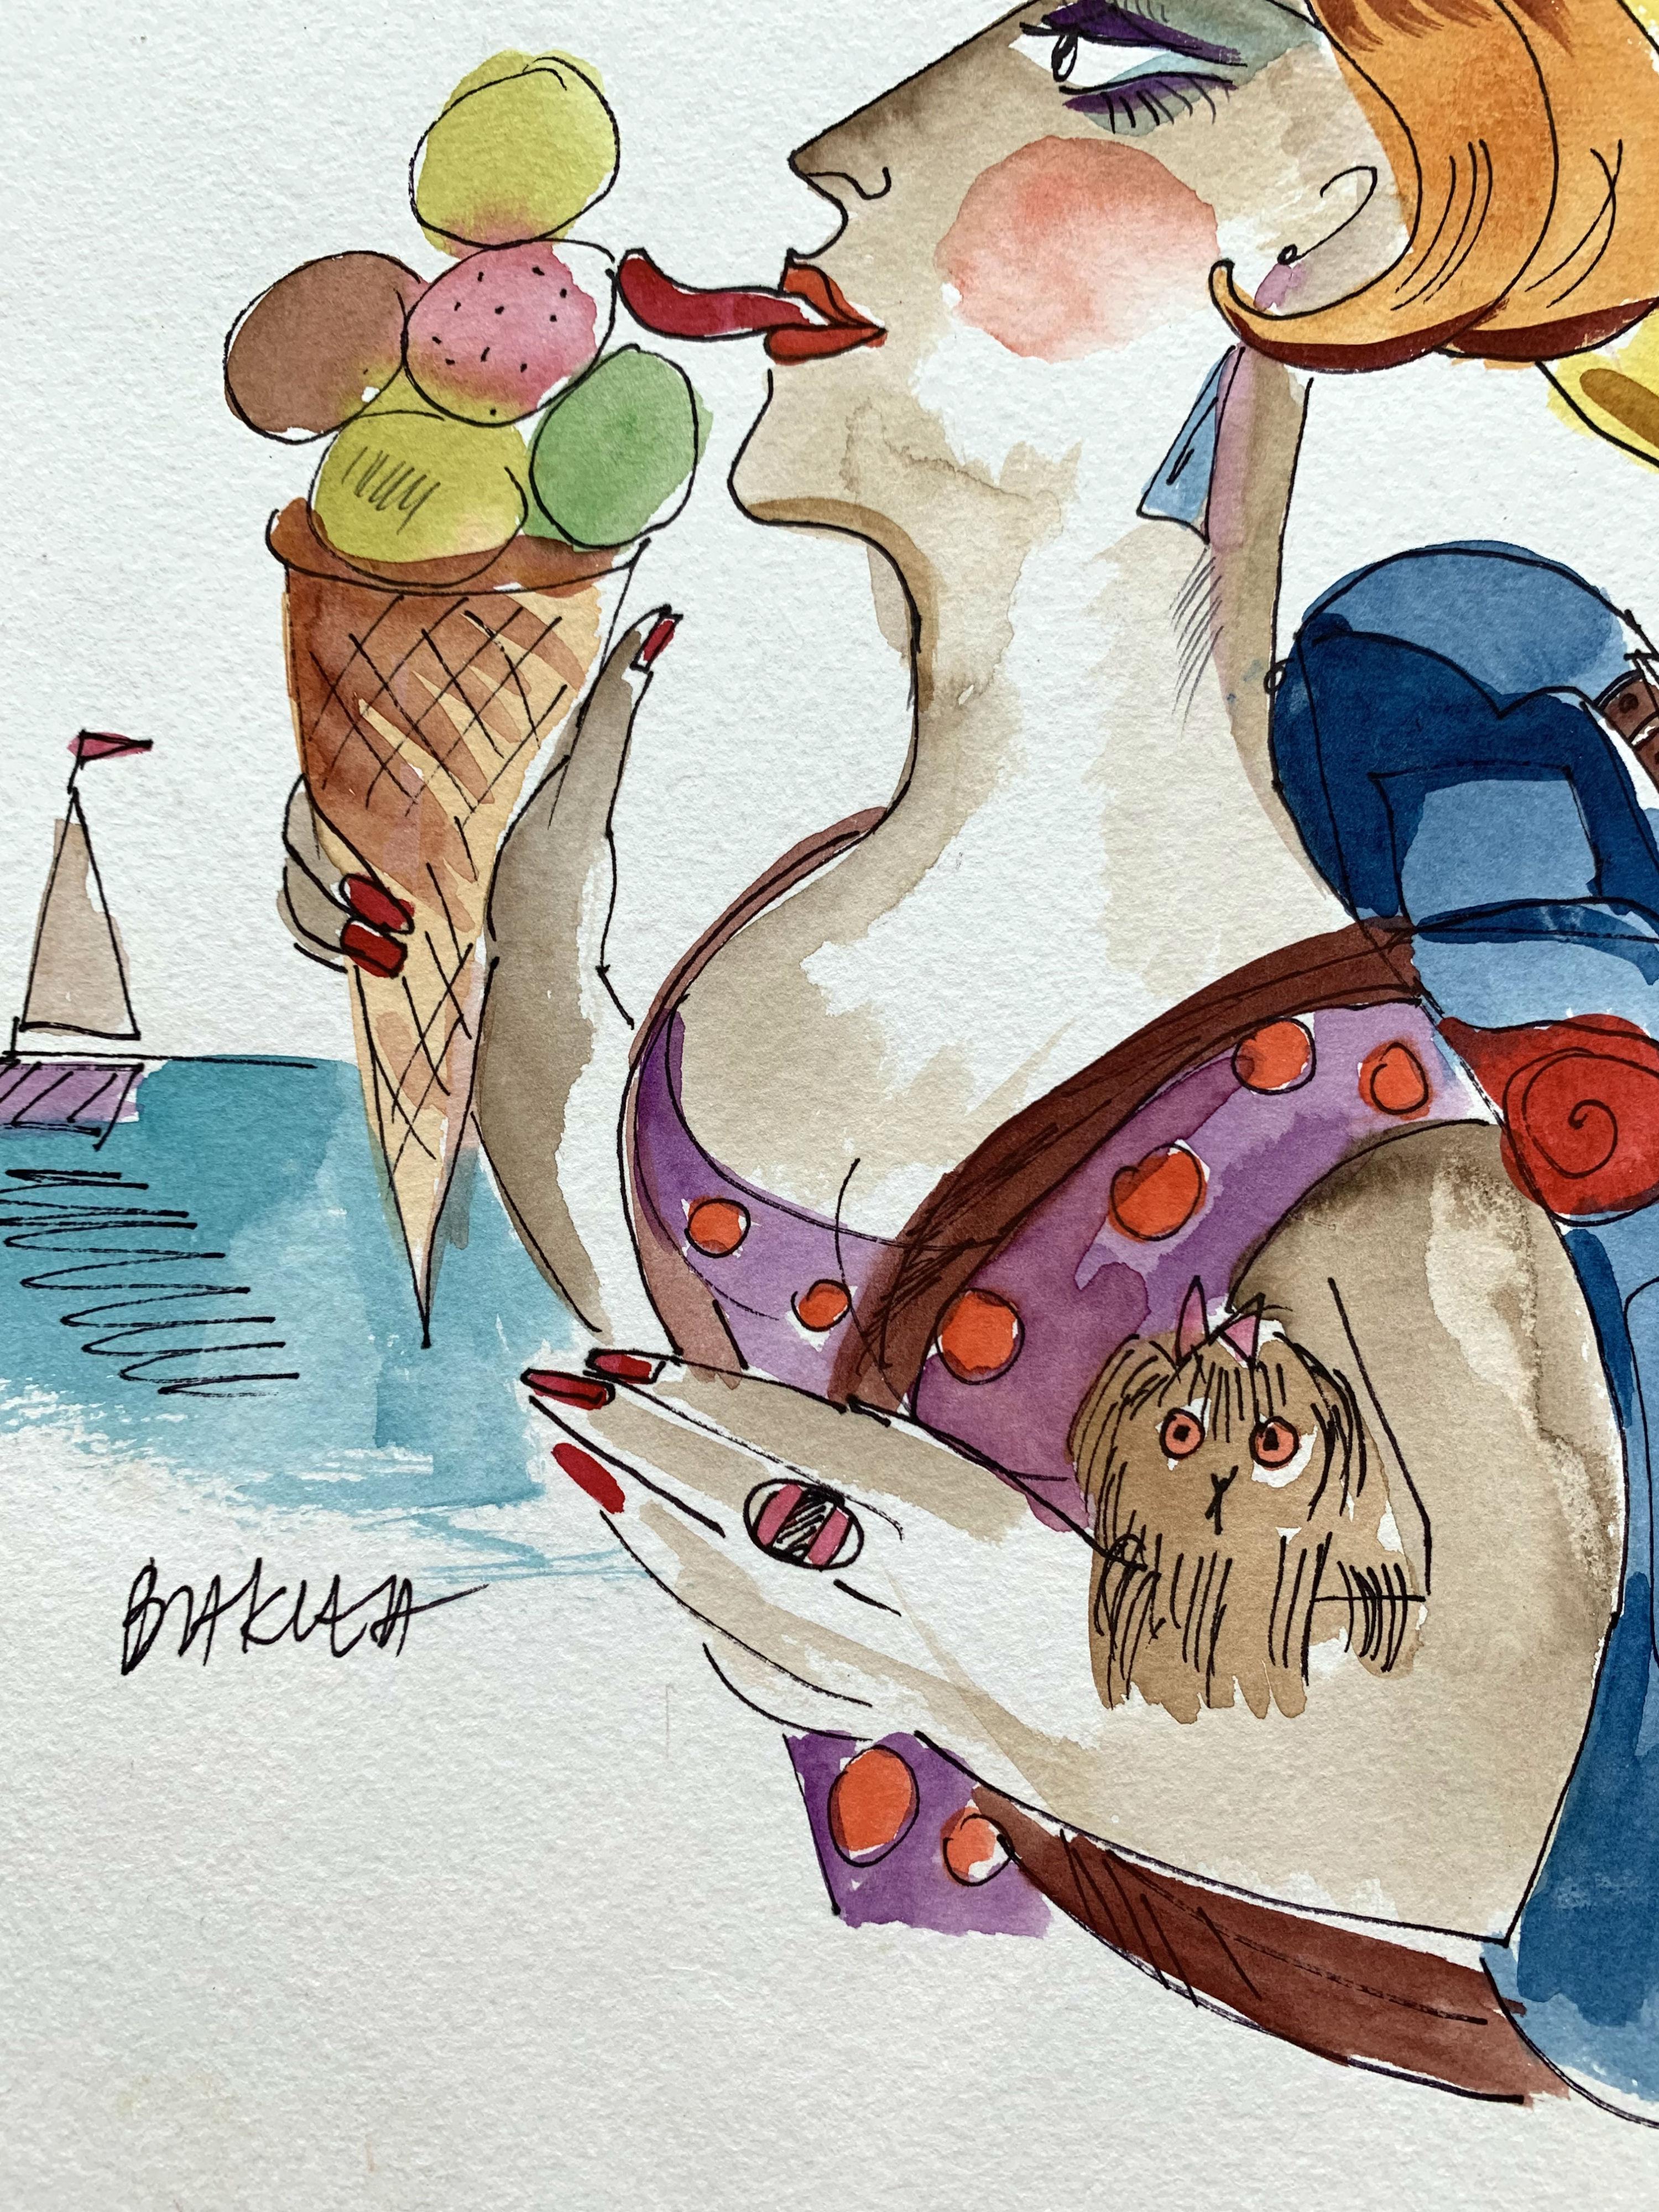 Ice cream - XXI century, Watercolour, Figurative, Colourful, Satirical - Other Art Style Art by Hanna Bakuła